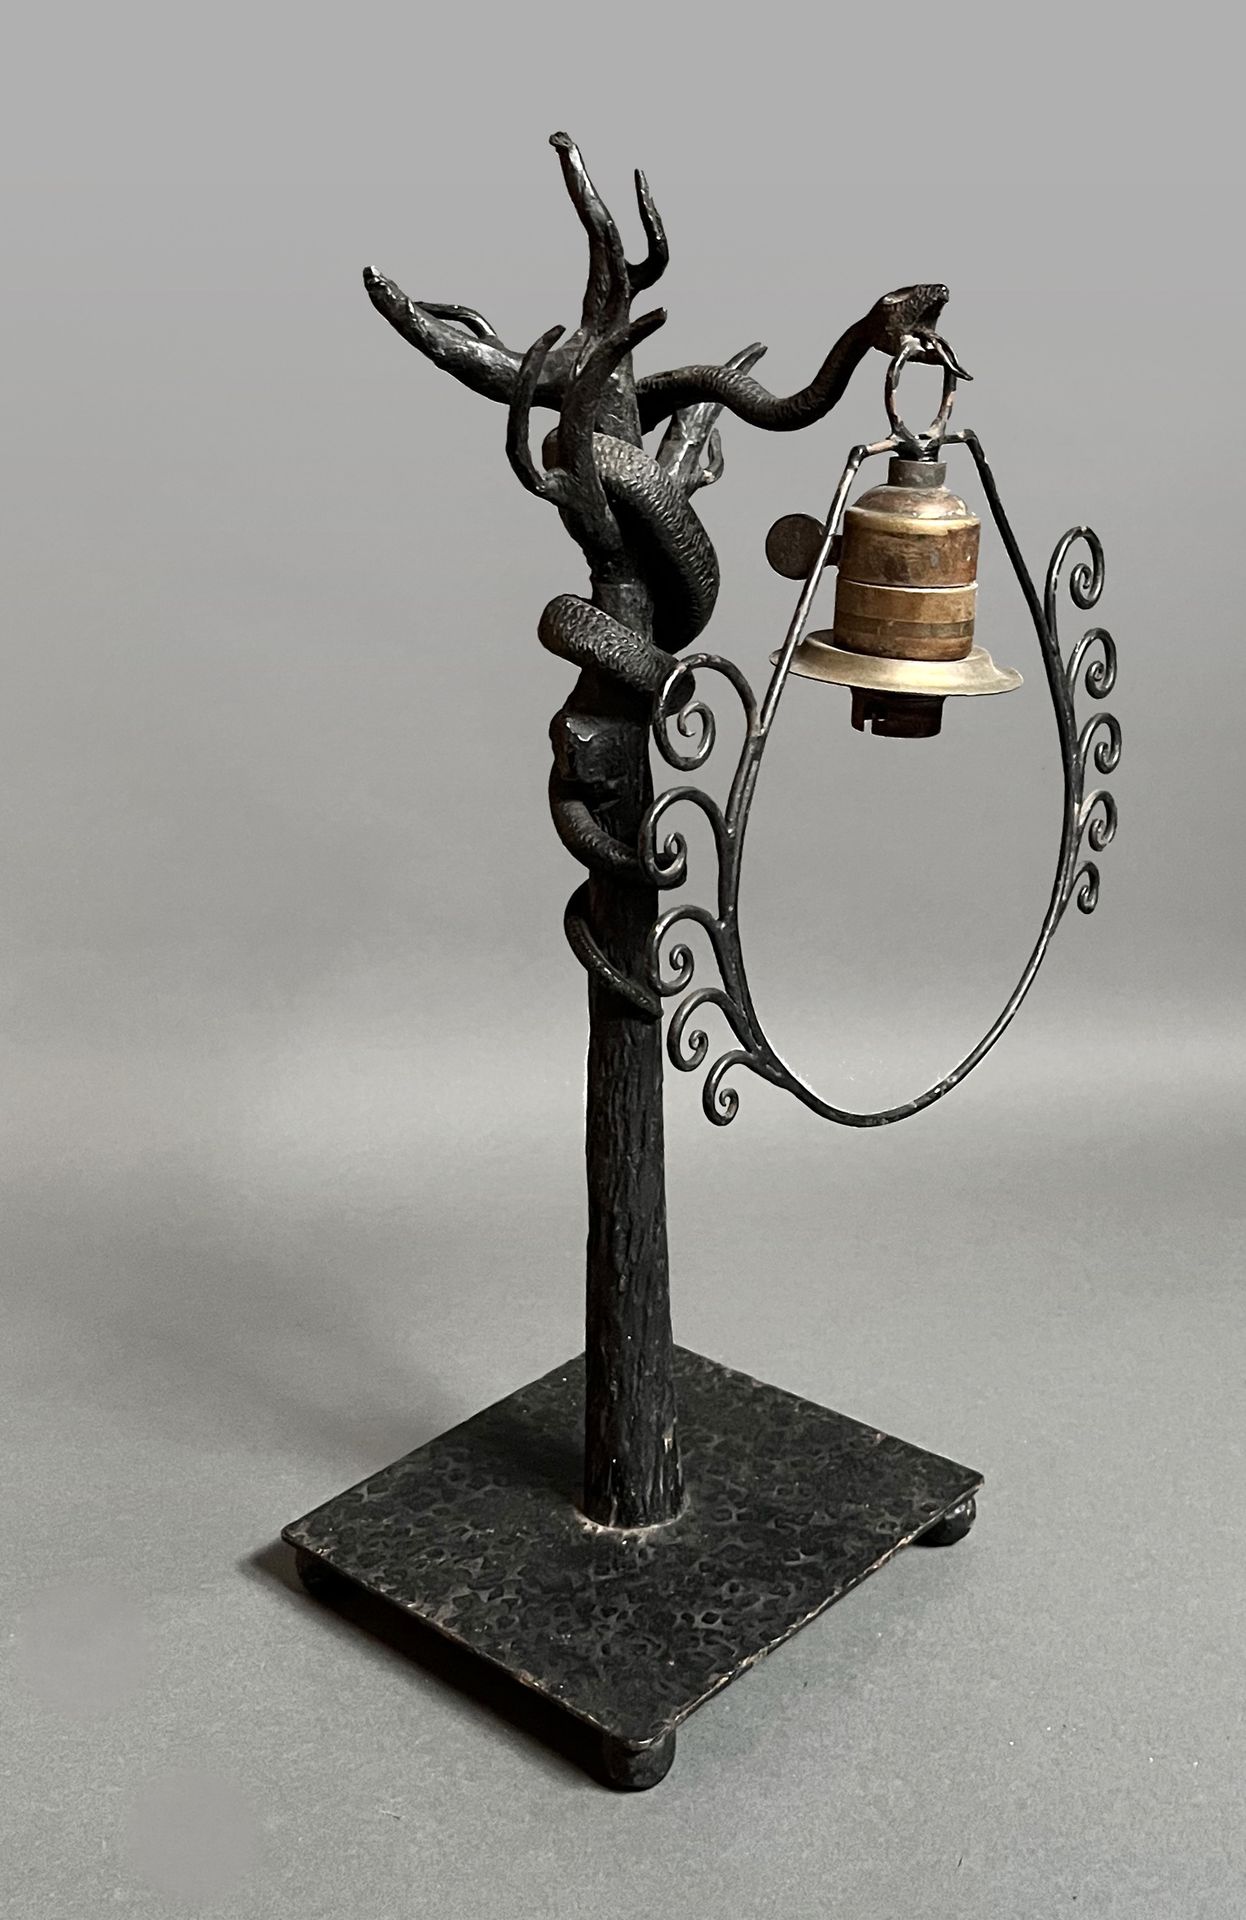 Null 埃德加-布兰特（1880-1960 年）（风格）锻铁灯座，描绘一条蛇盘绕在树上，嘴里叼着灯罩。高 45 厘米